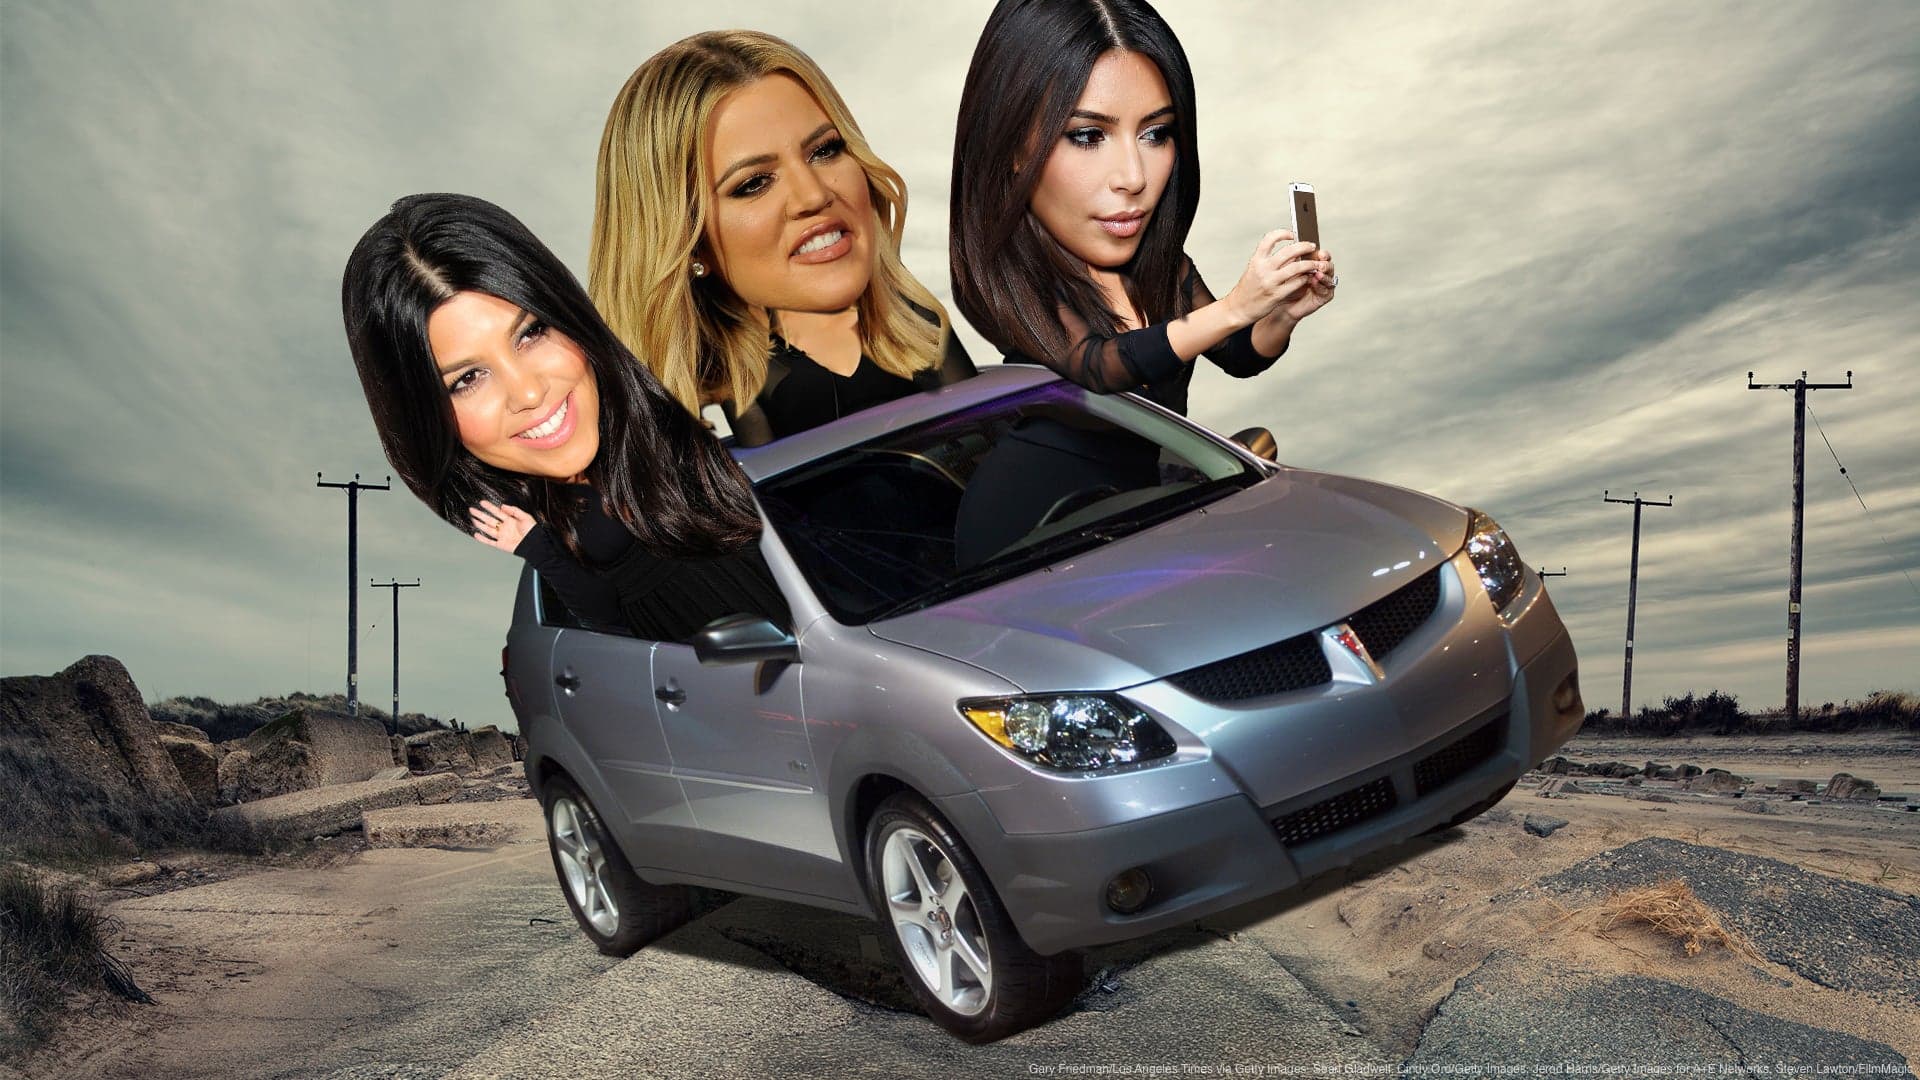 The Kardashians Don’t Deserve Nice Cars